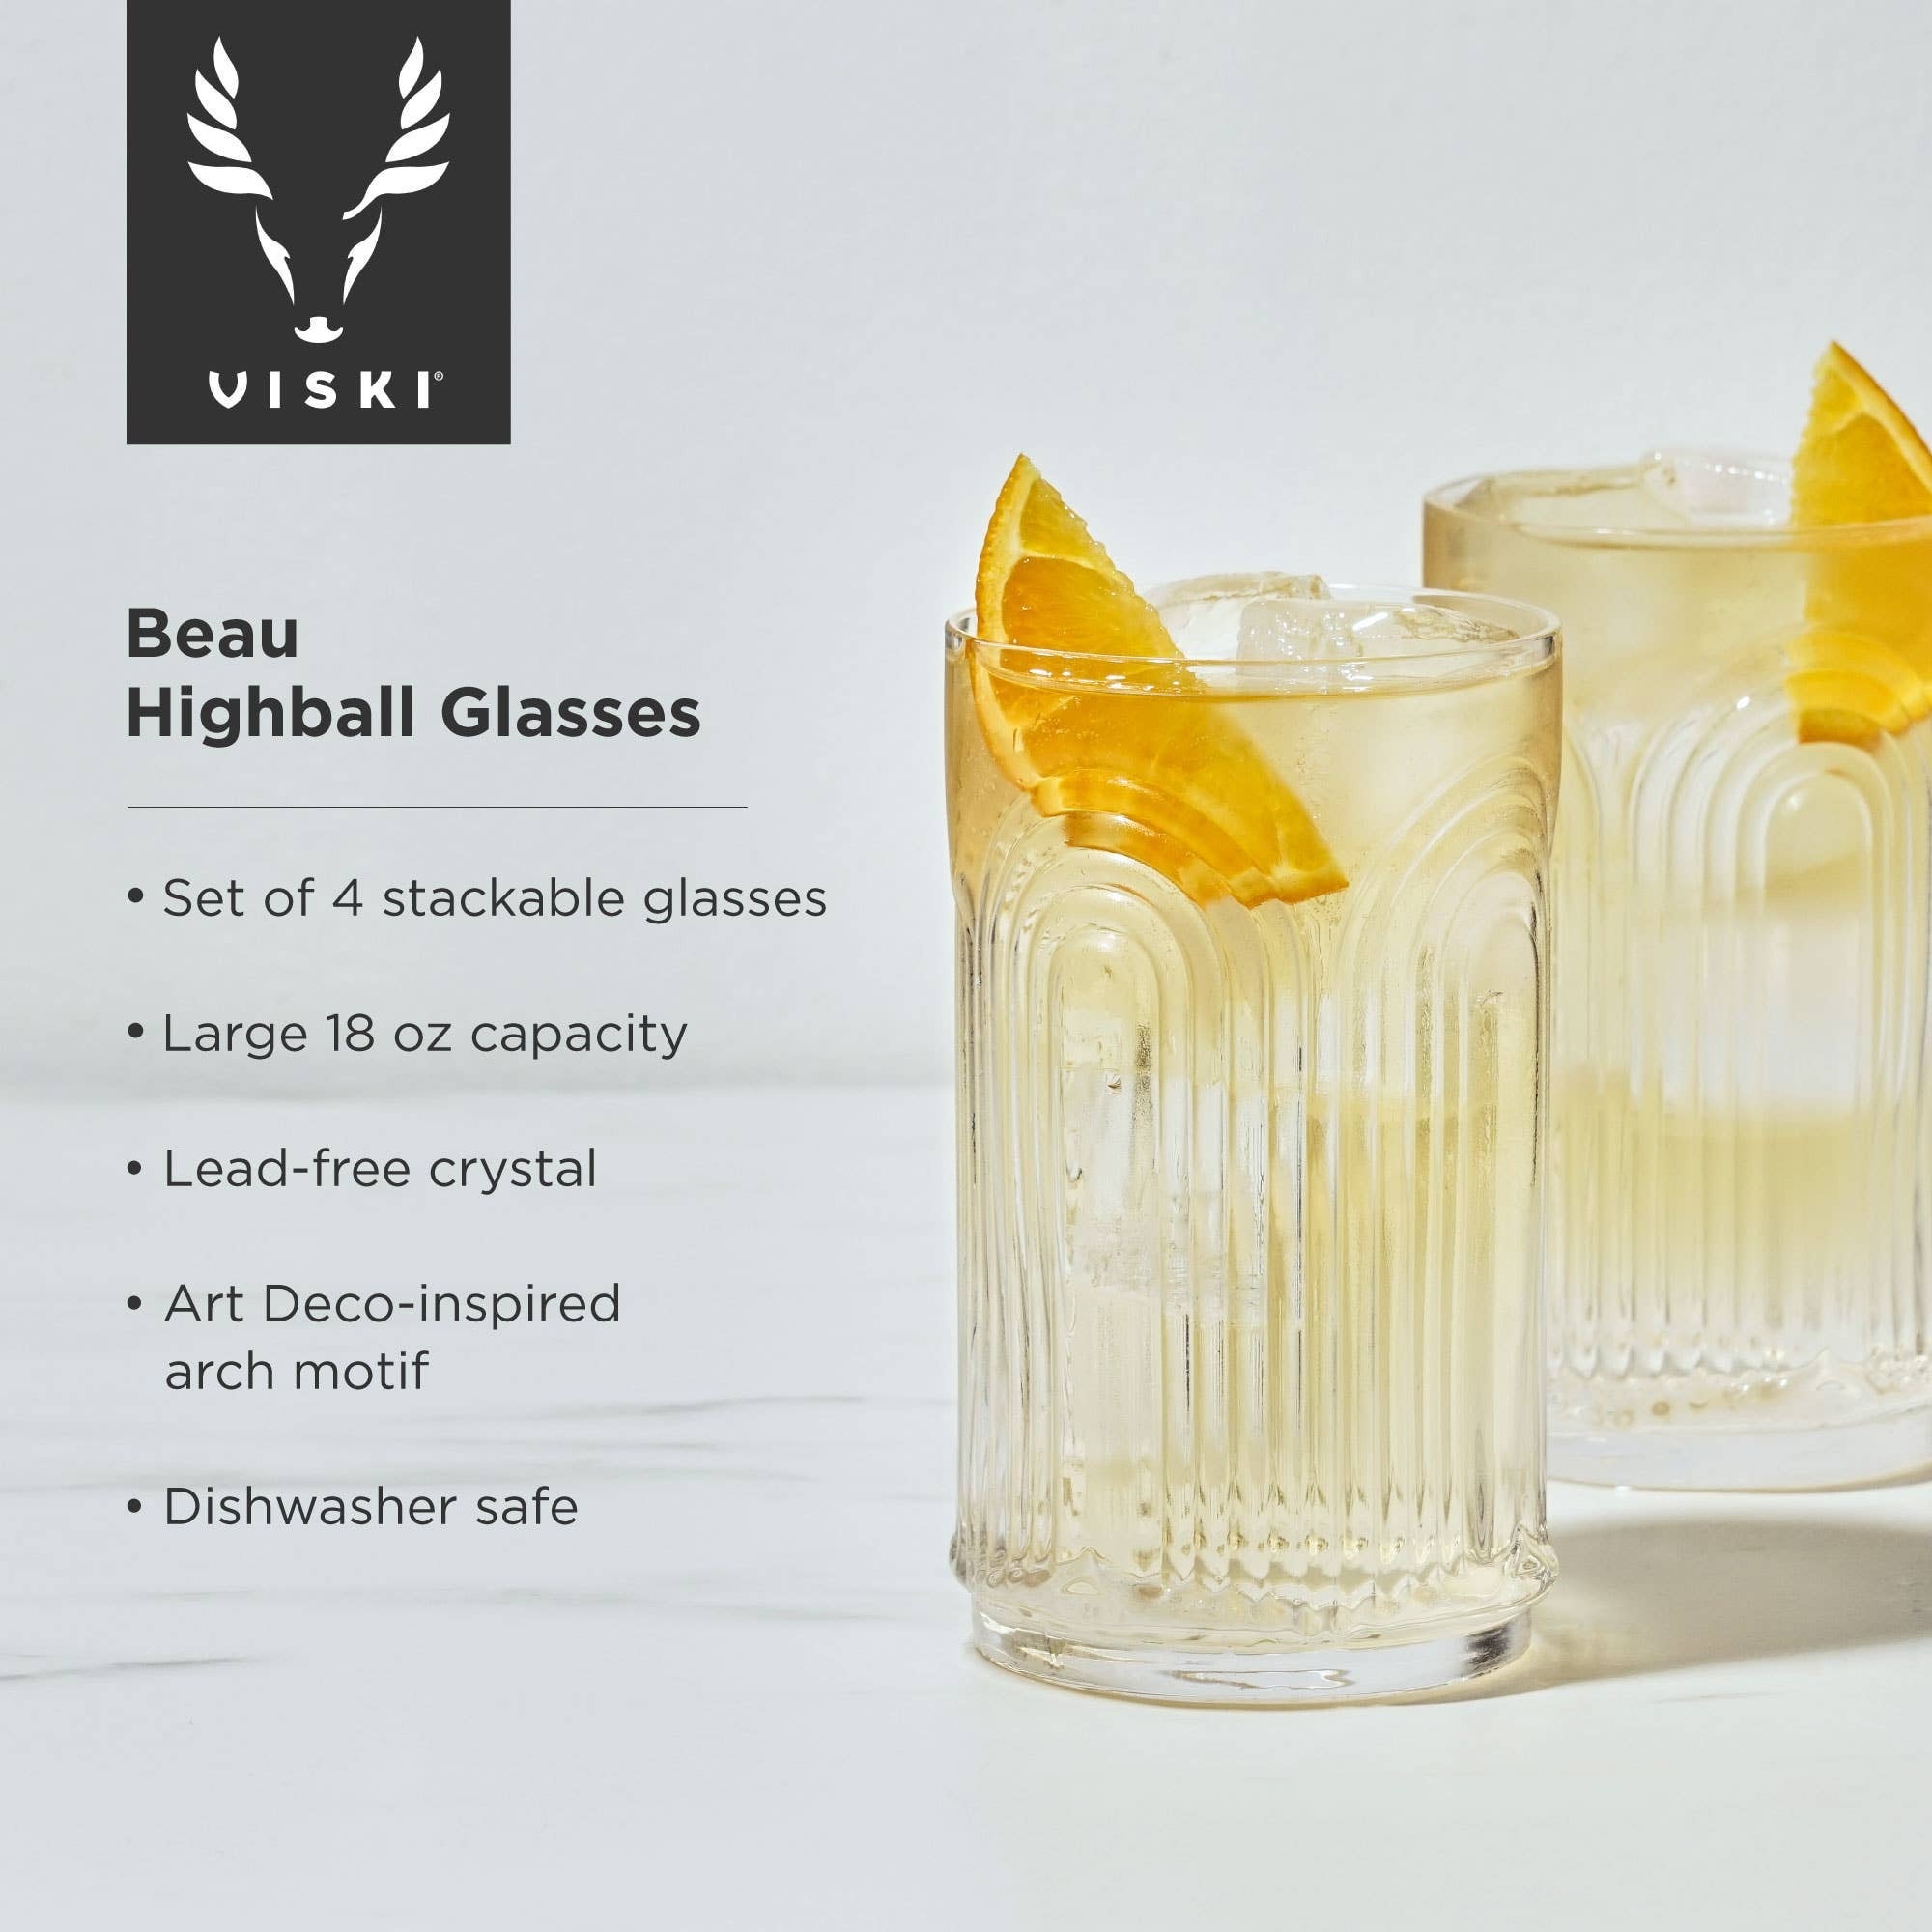 Beau Highball Glasses (set of 4)